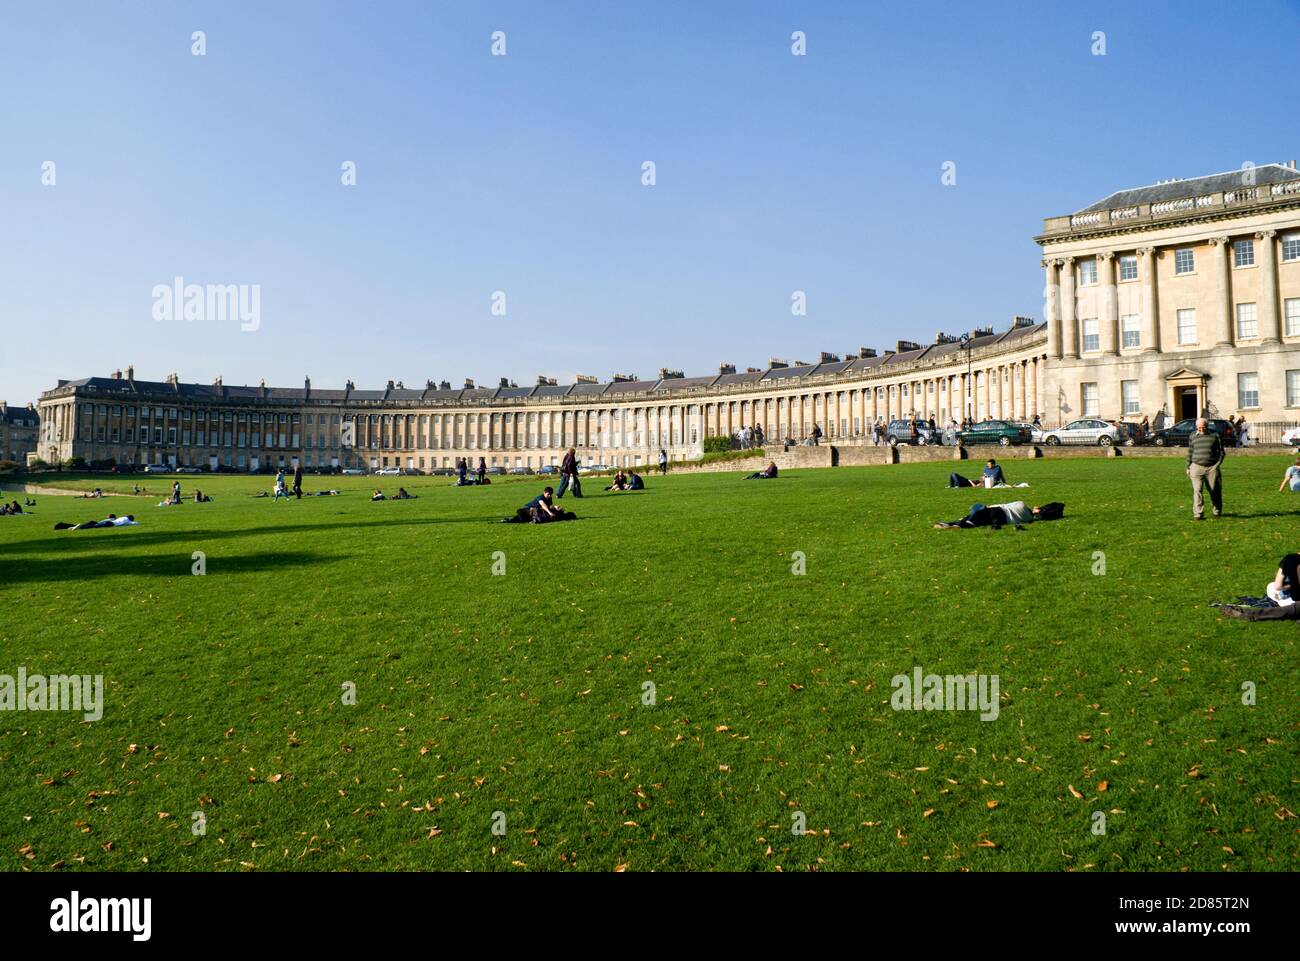 Royal Crescent, Bath, Somerset, England, UK. Stock Photo